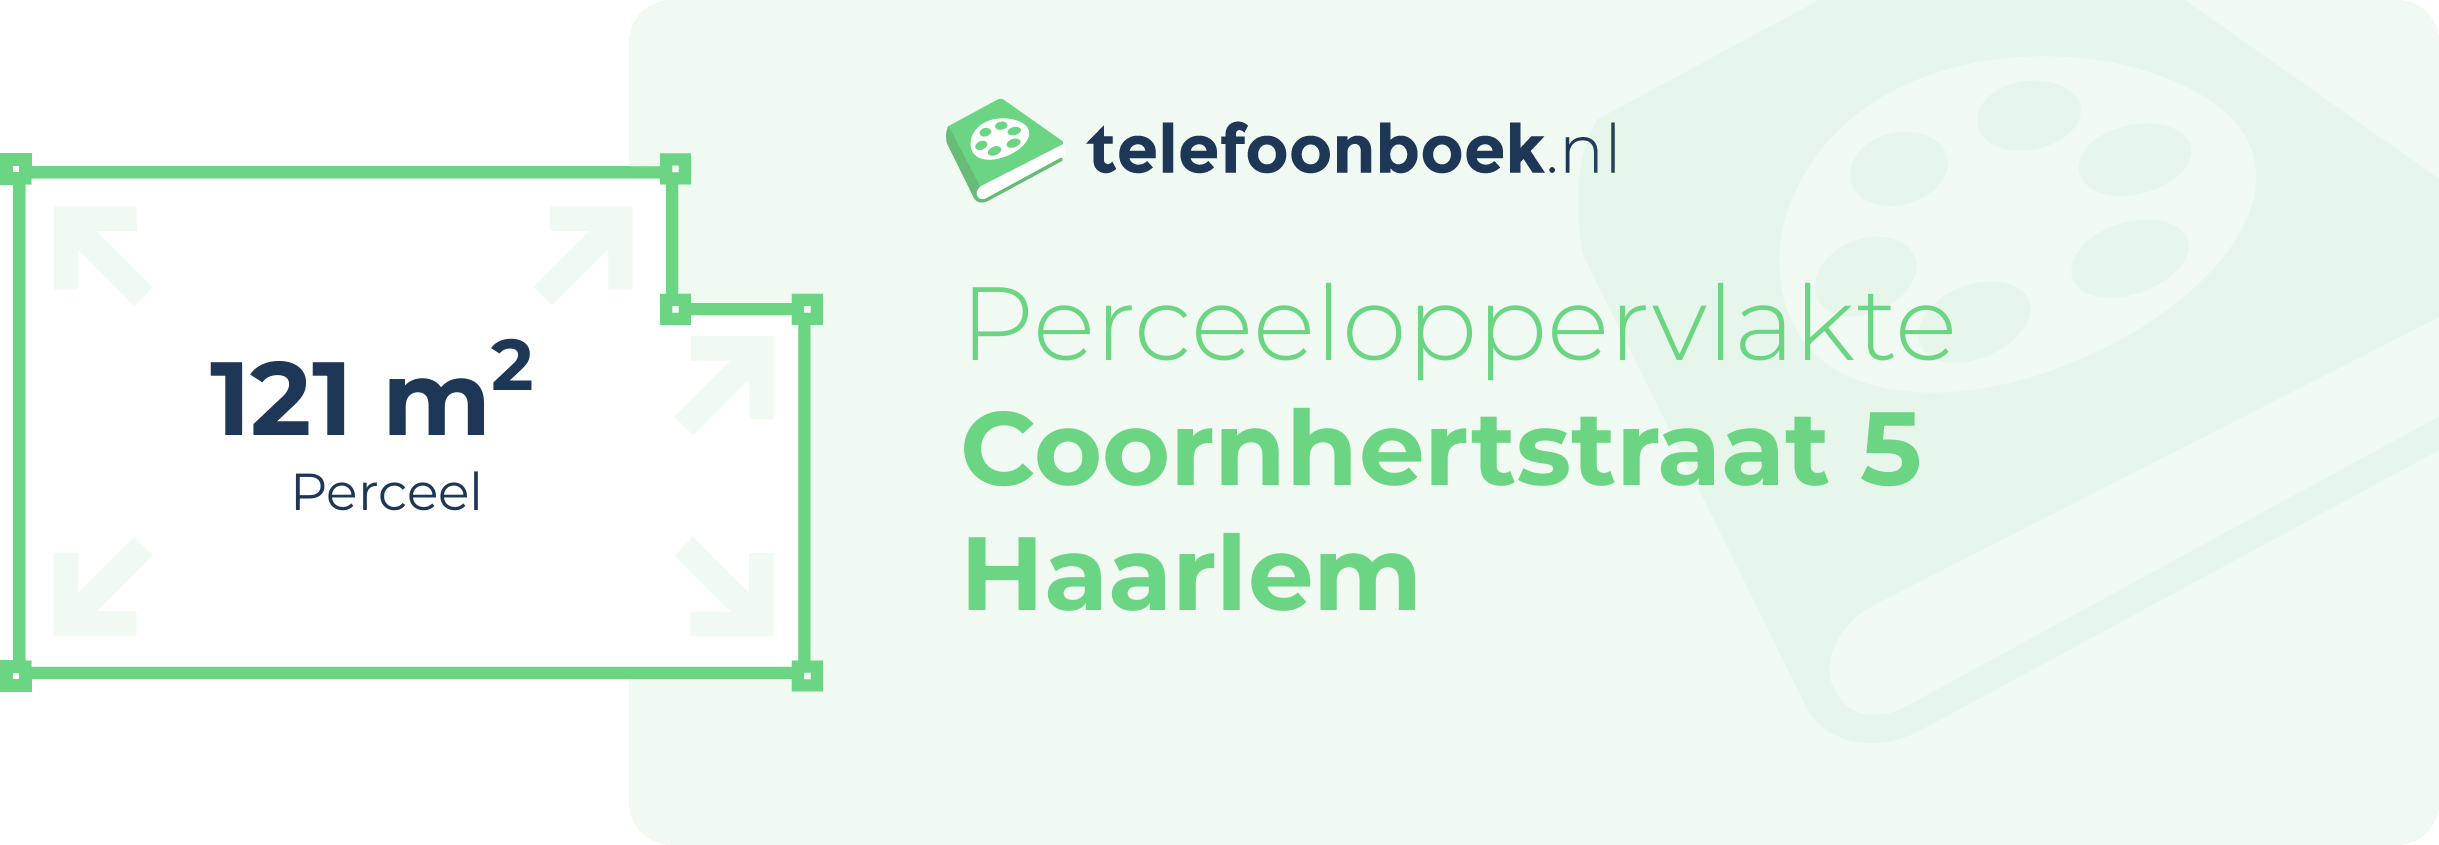 Perceeloppervlakte Coornhertstraat 5 Haarlem